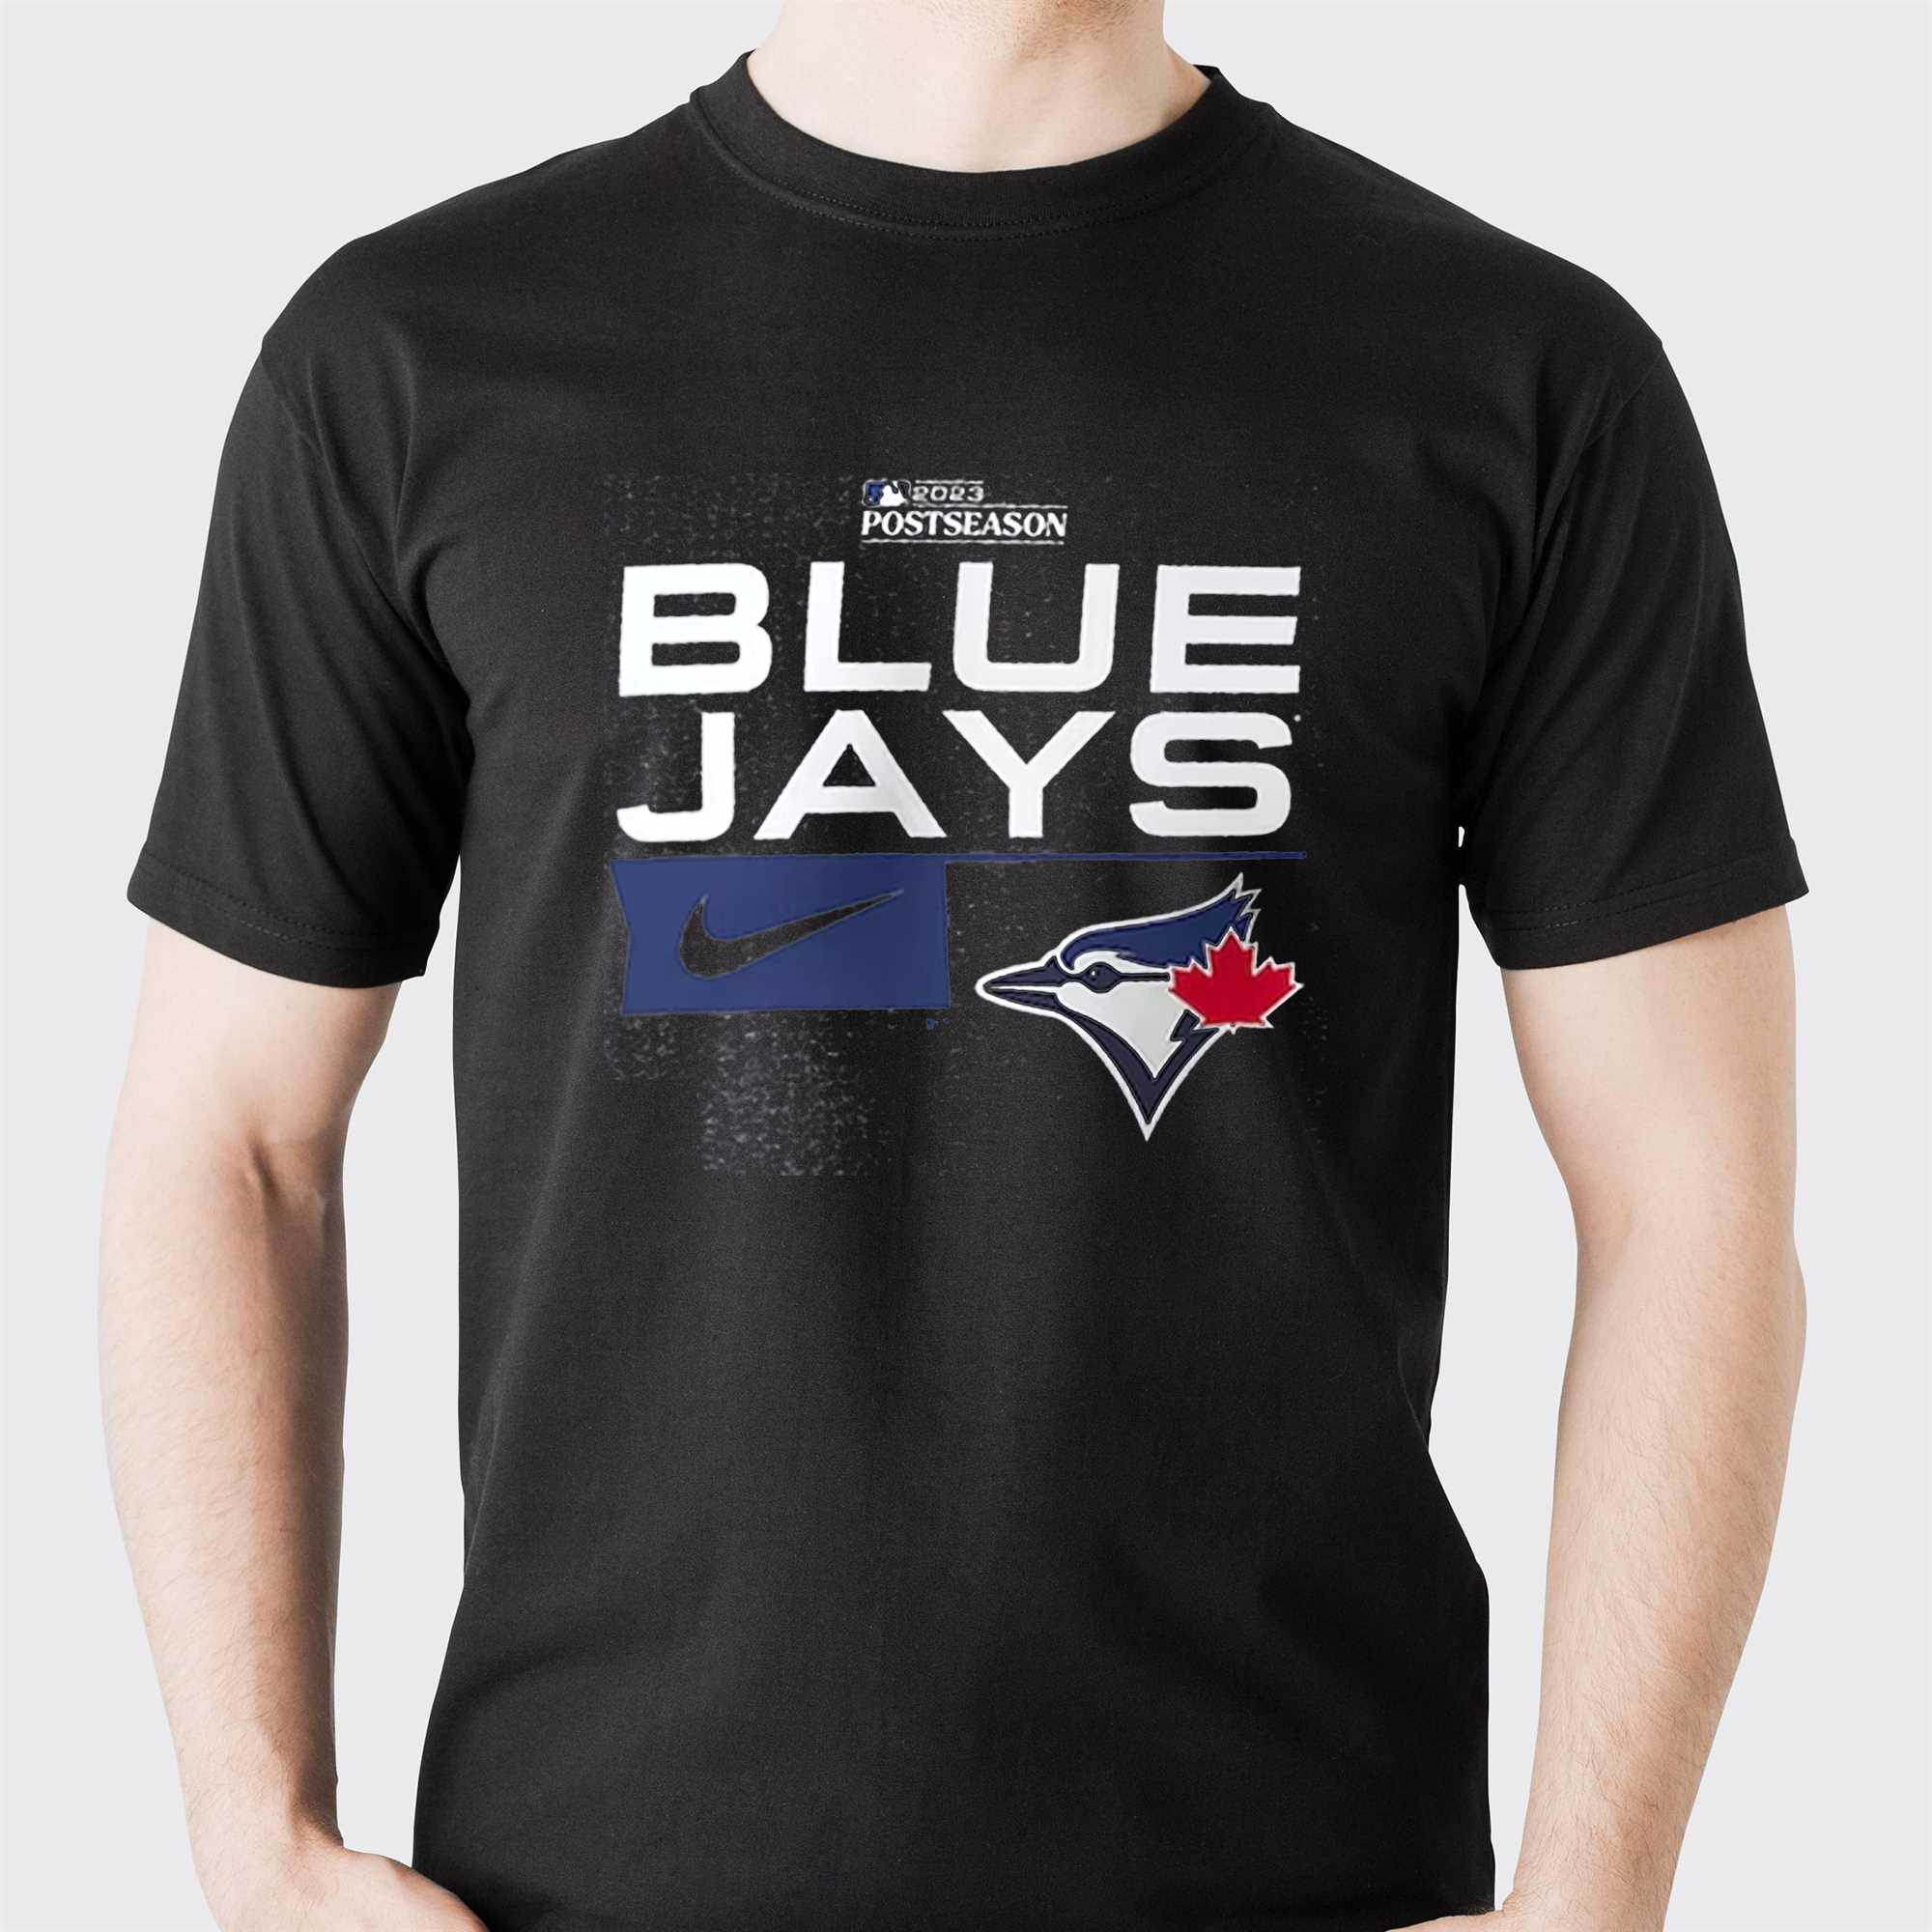 Toronto Blue Jays Apparel & Gear.